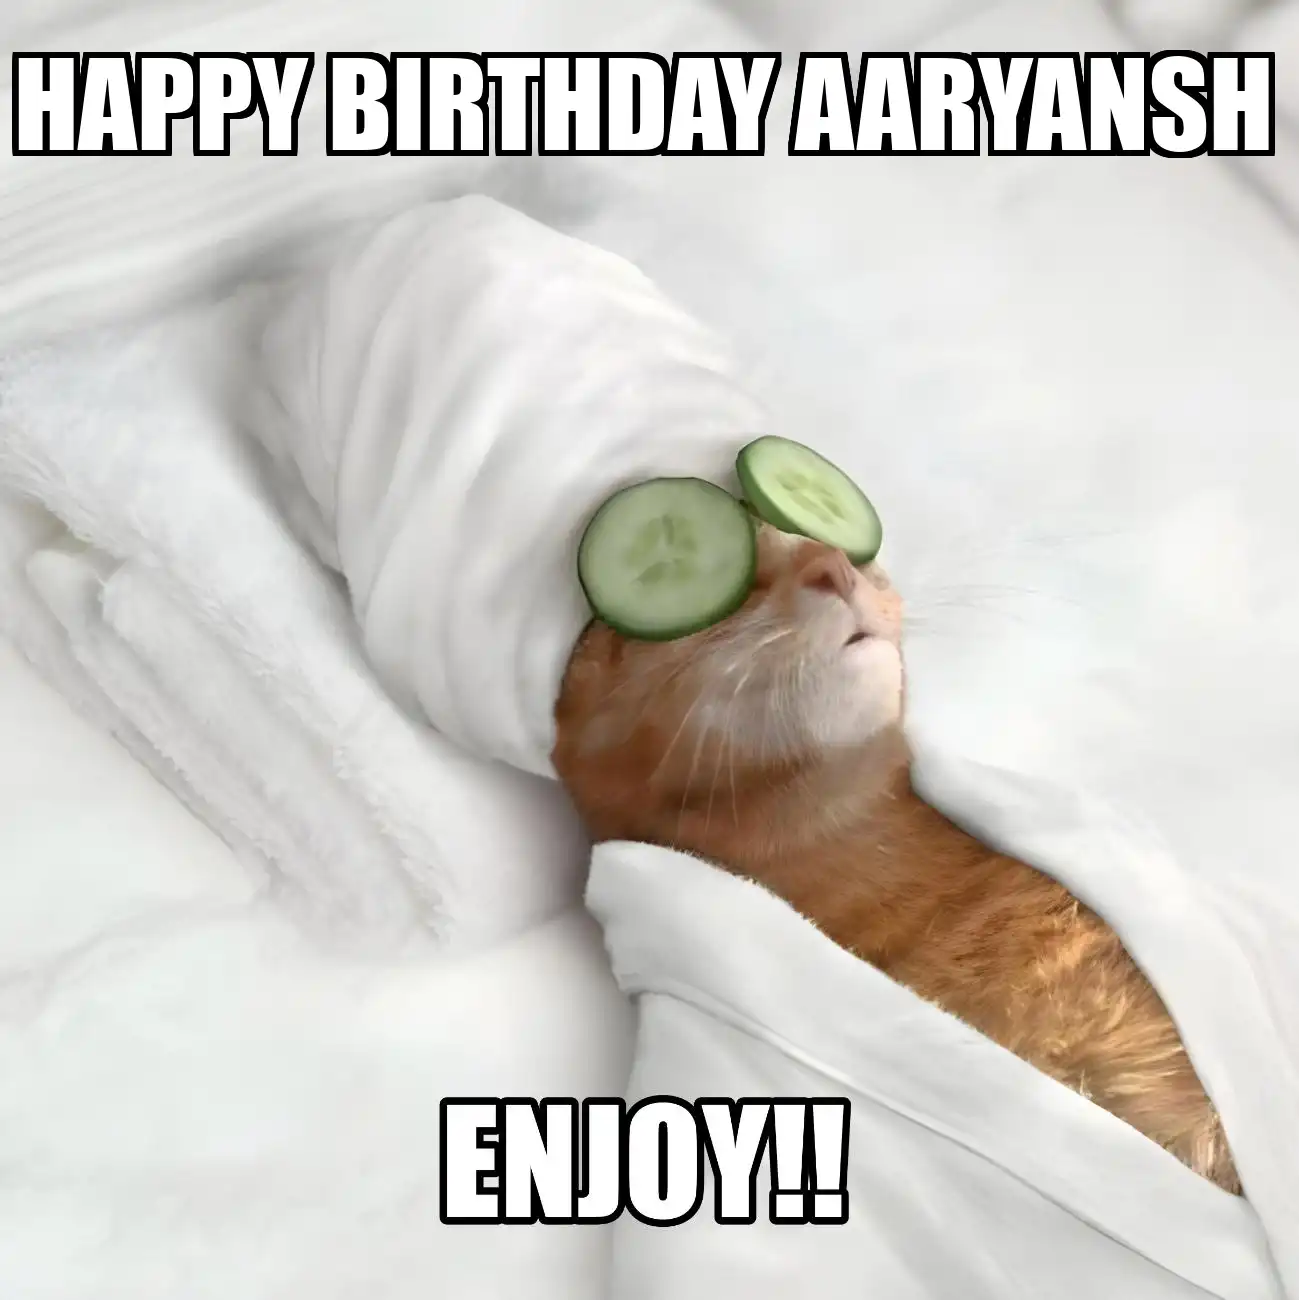 Happy Birthday Aaryansh Enjoy Cat Meme